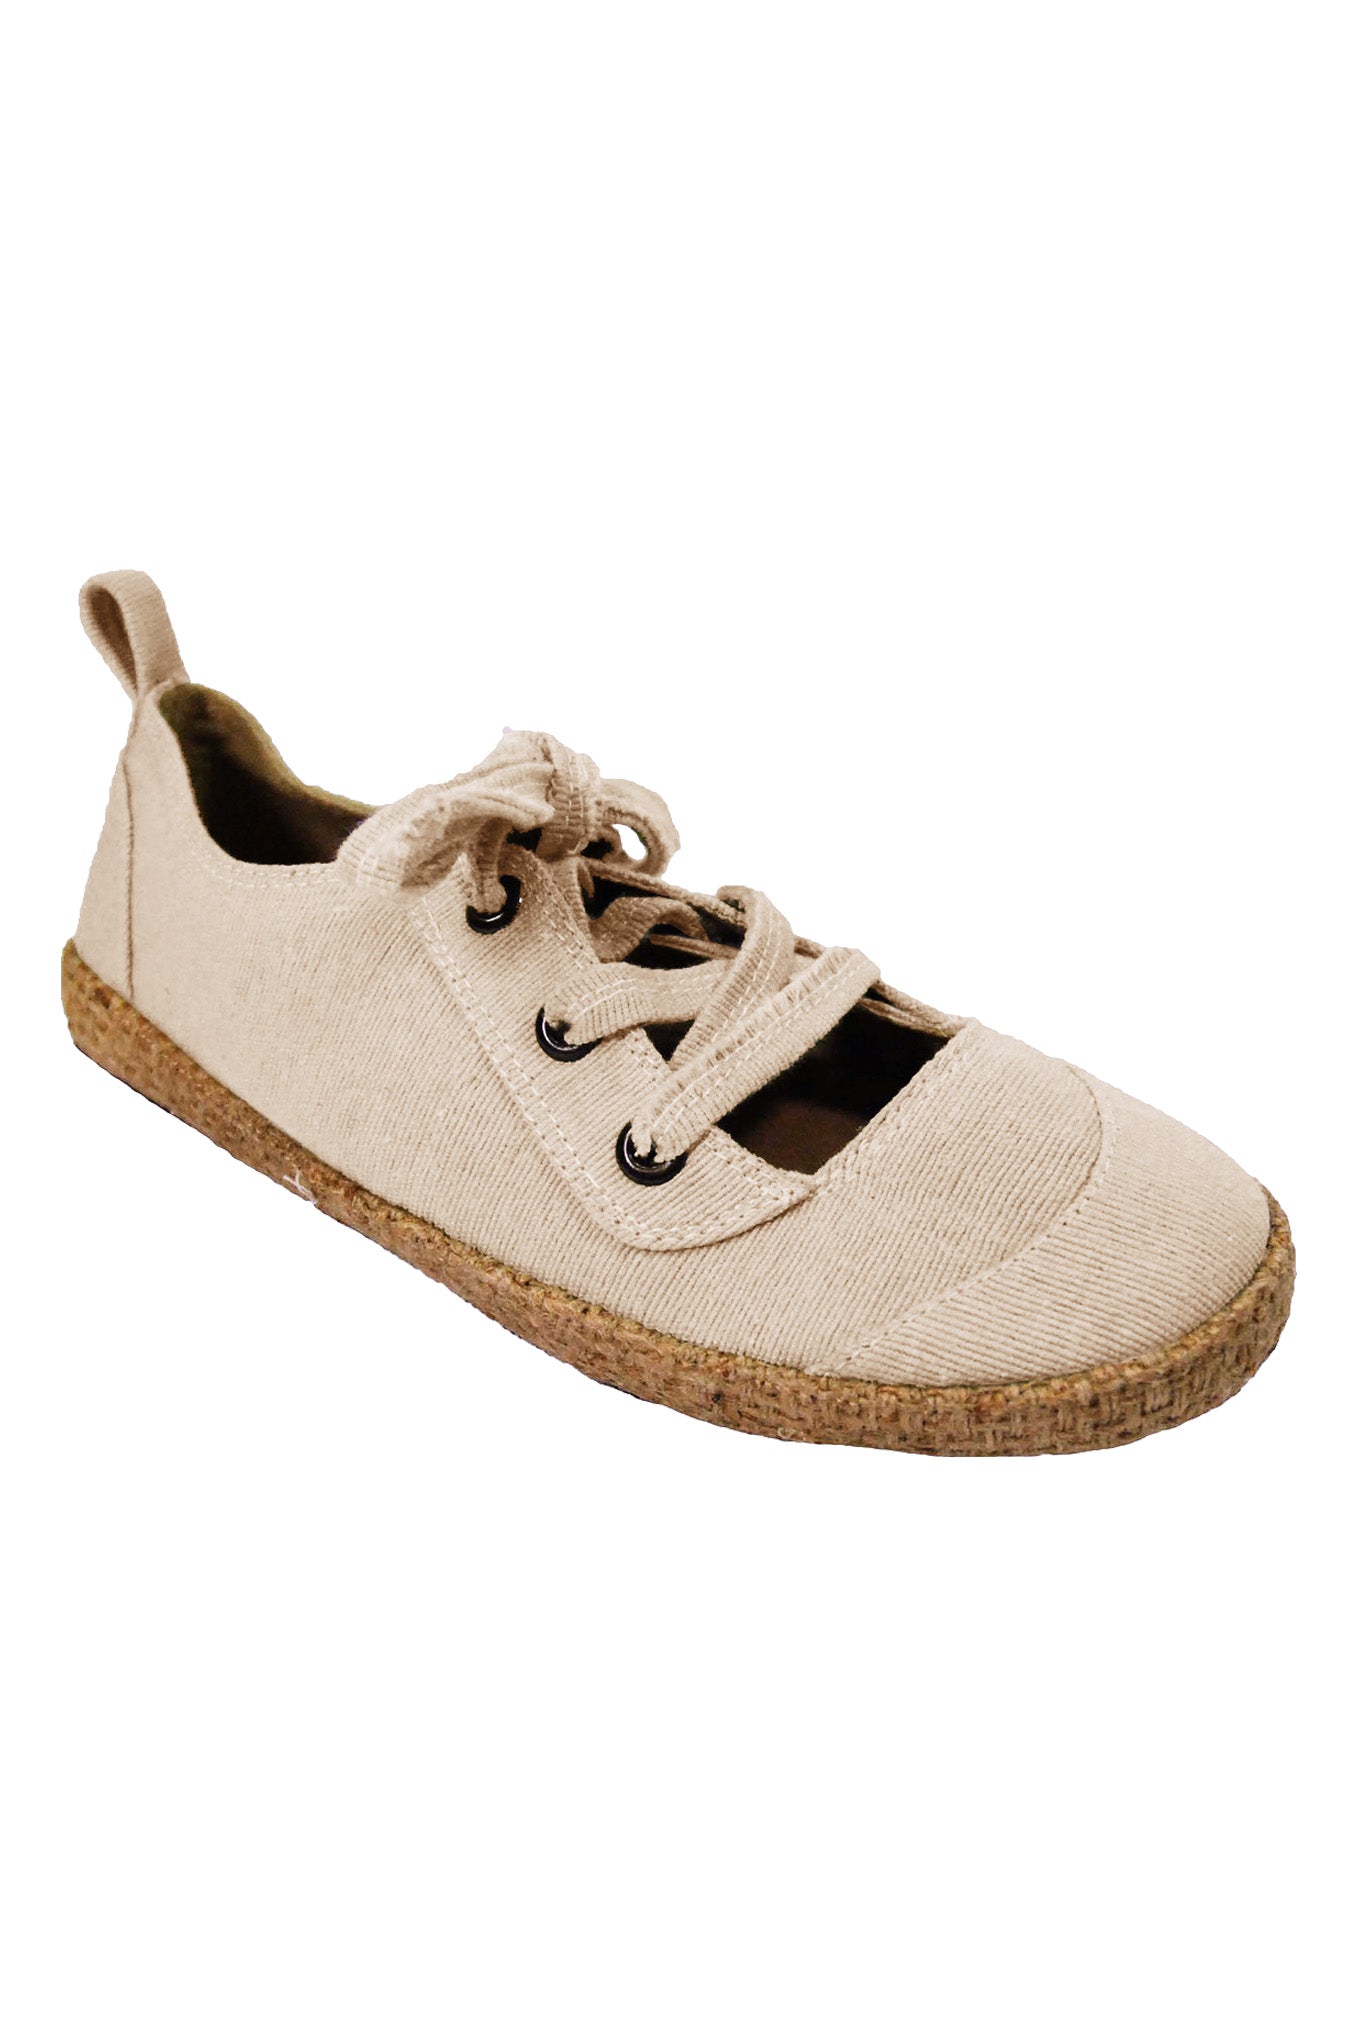 BALI BALLET Shoes - Stone, EURO 39